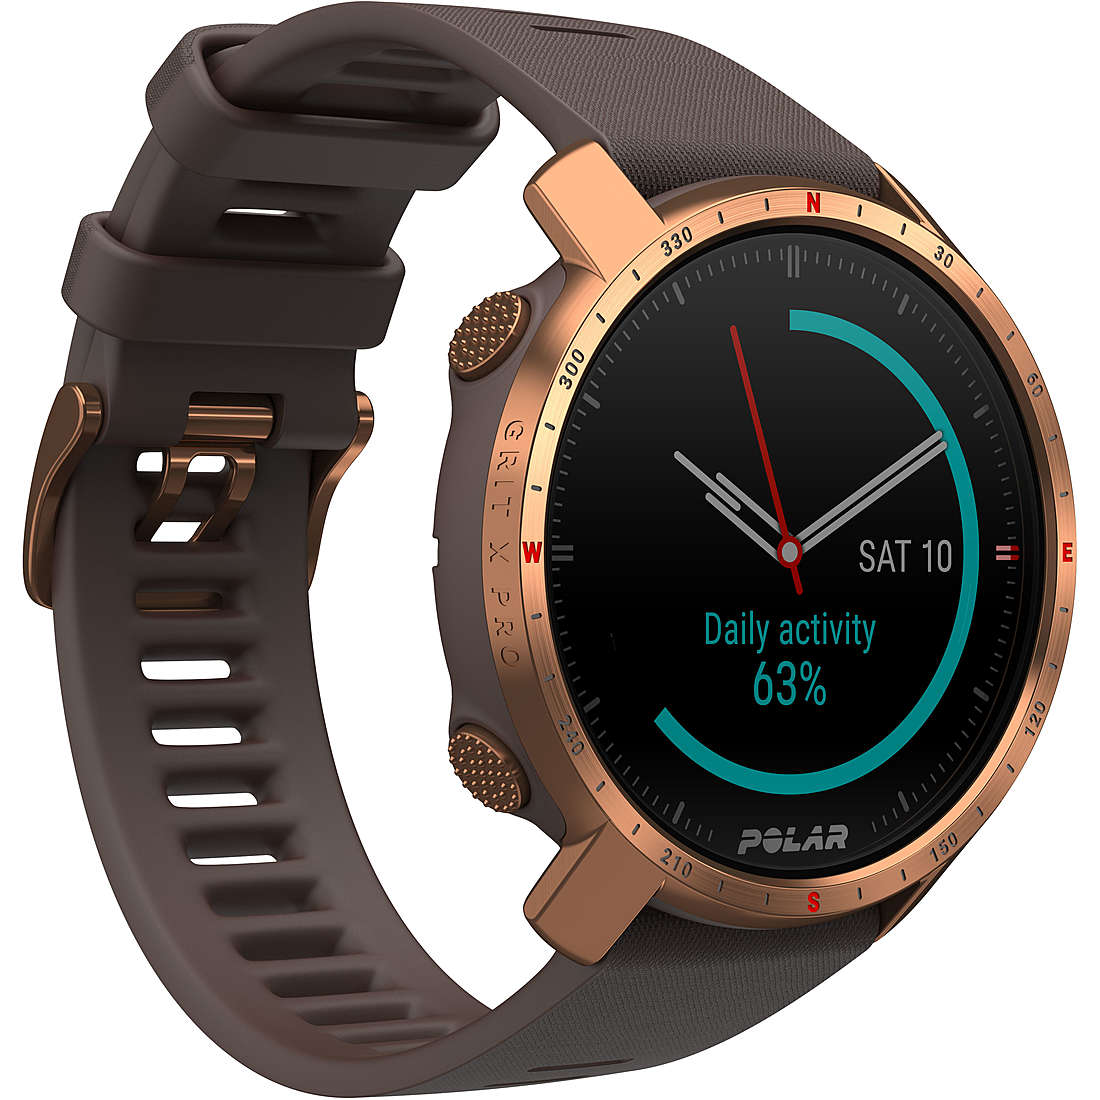 orologio Smartwatch uomo Polar Grit X Pro - 90085775 90085775